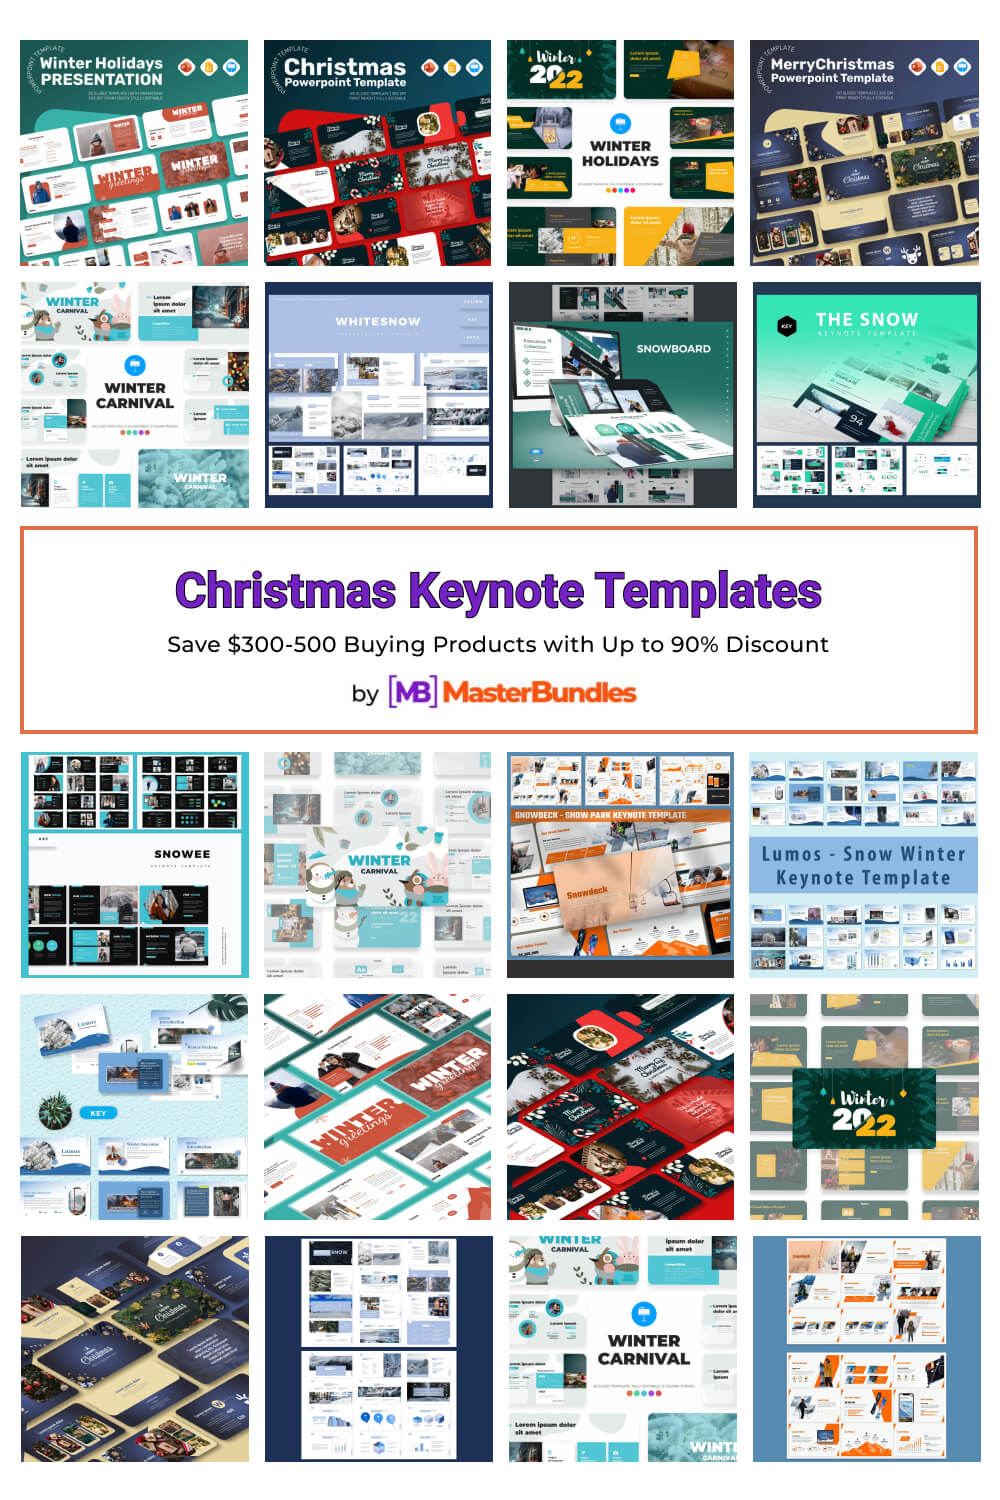 christmas keynote templates pinterest image.